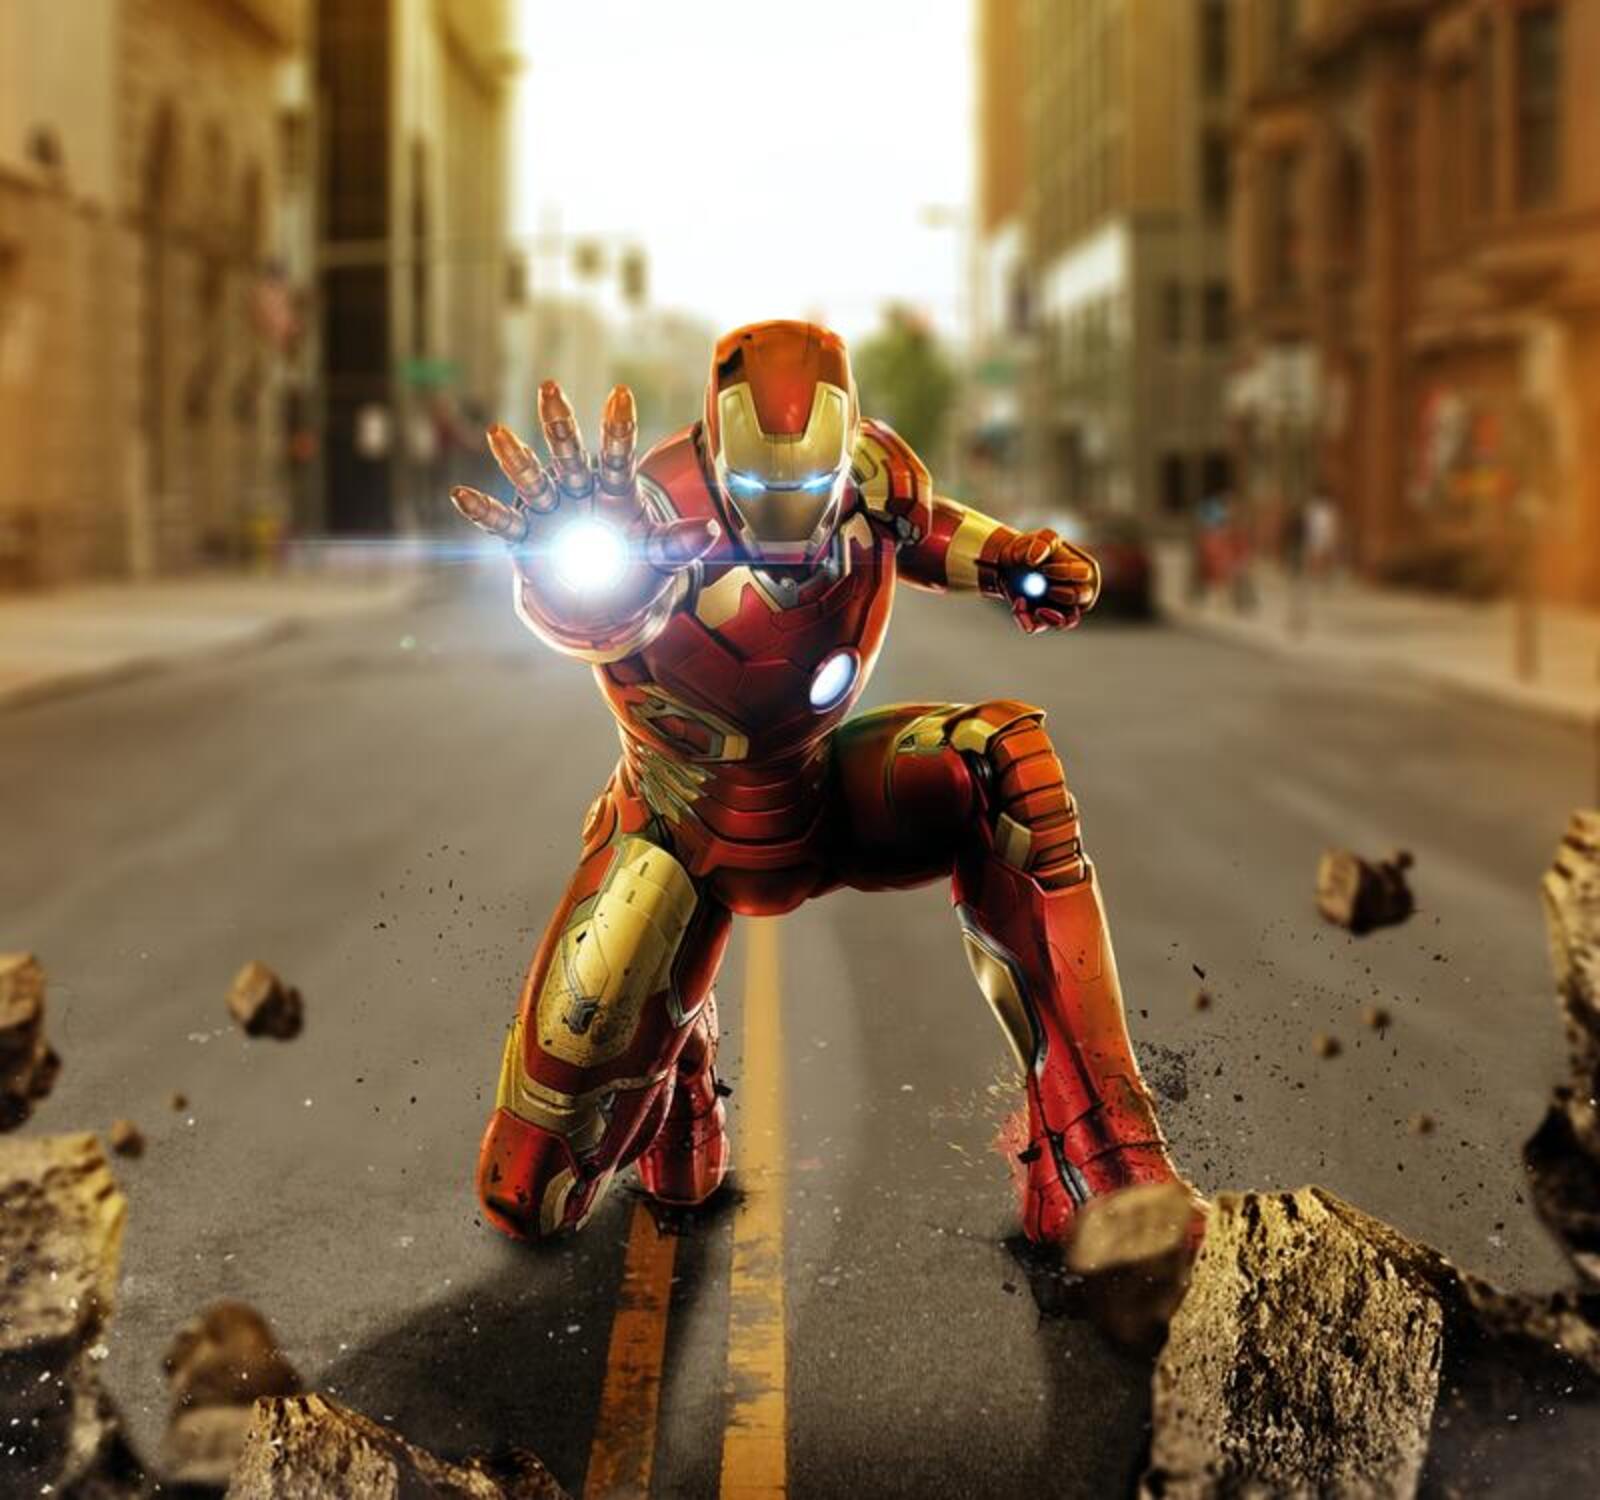 Wallpapers Avengers Iron Man nanosuit on the desktop